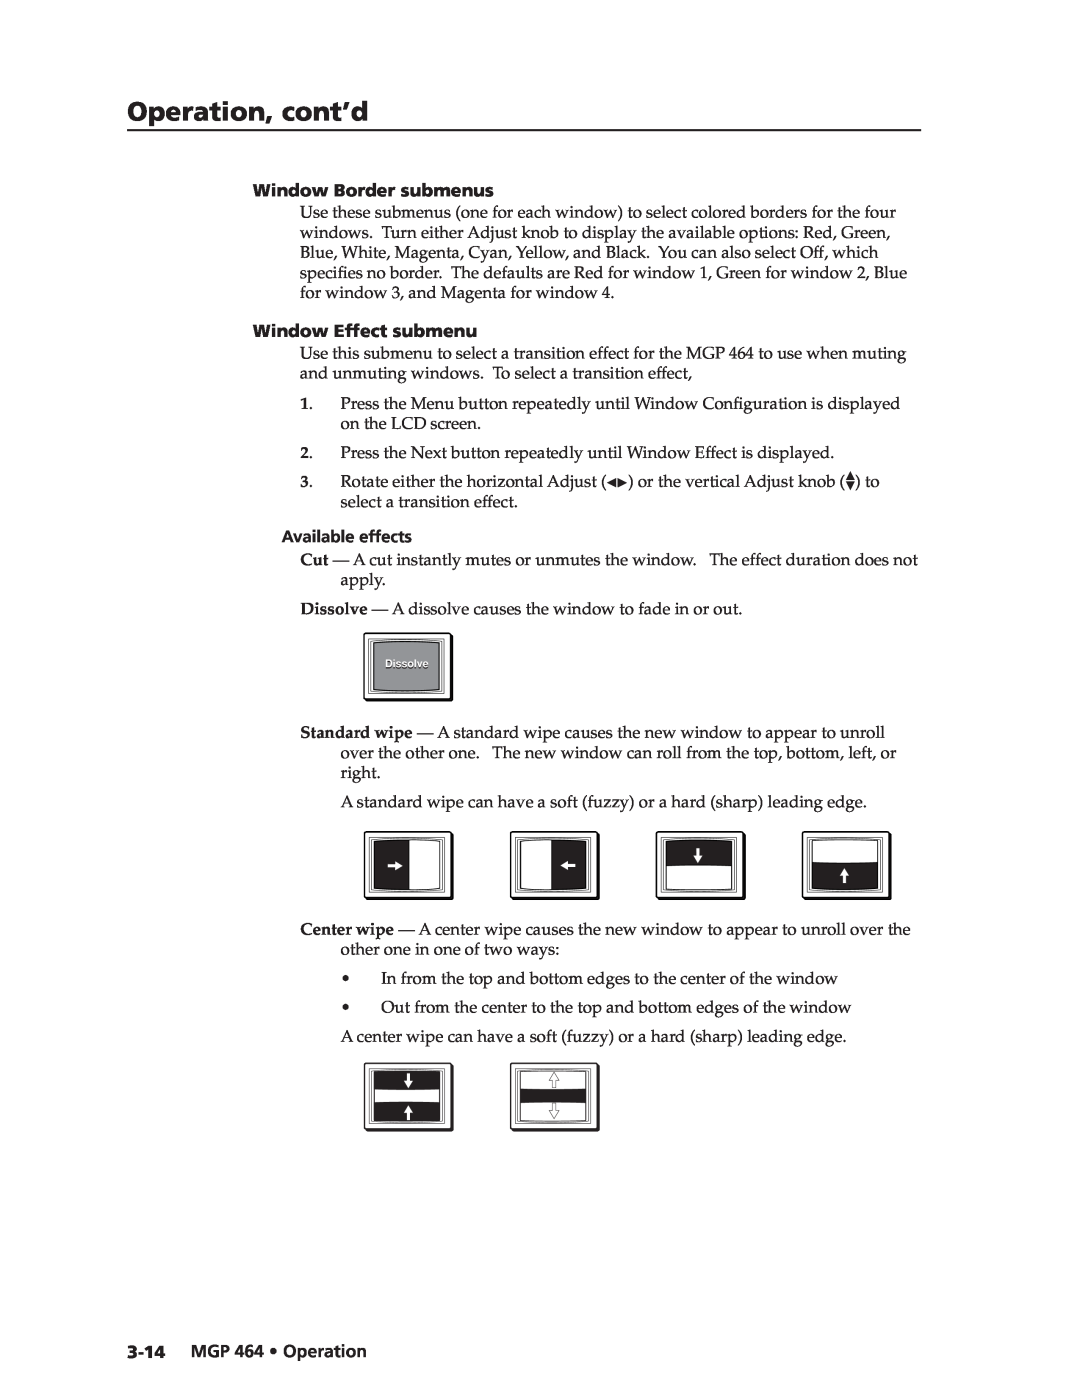 Extron electronic MGP 464 DI manual Preliminary, Operation, cont’d, Window Border submenus, Window Effect submenu 